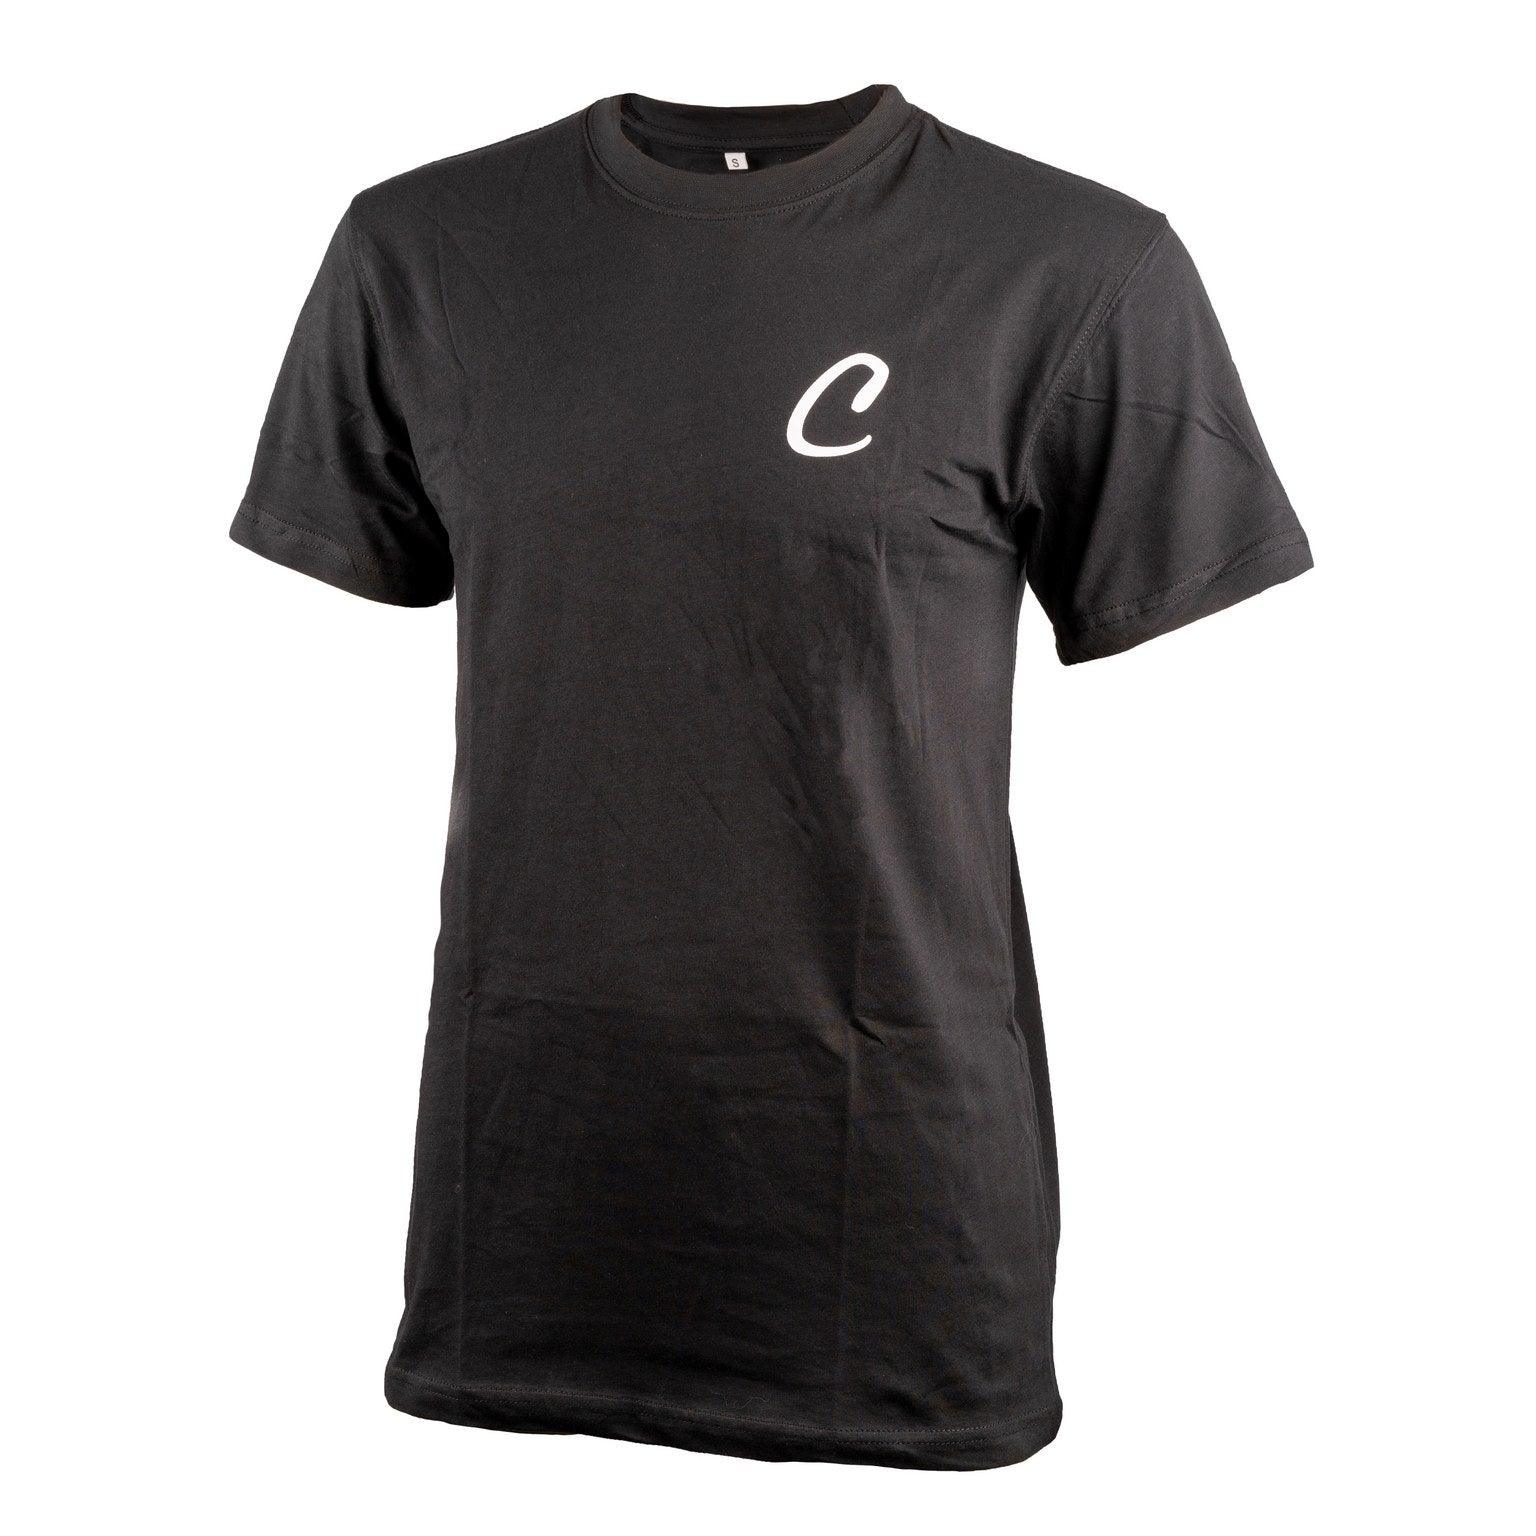 Crest - Cotton "C" T-shirt - Crest - PFG